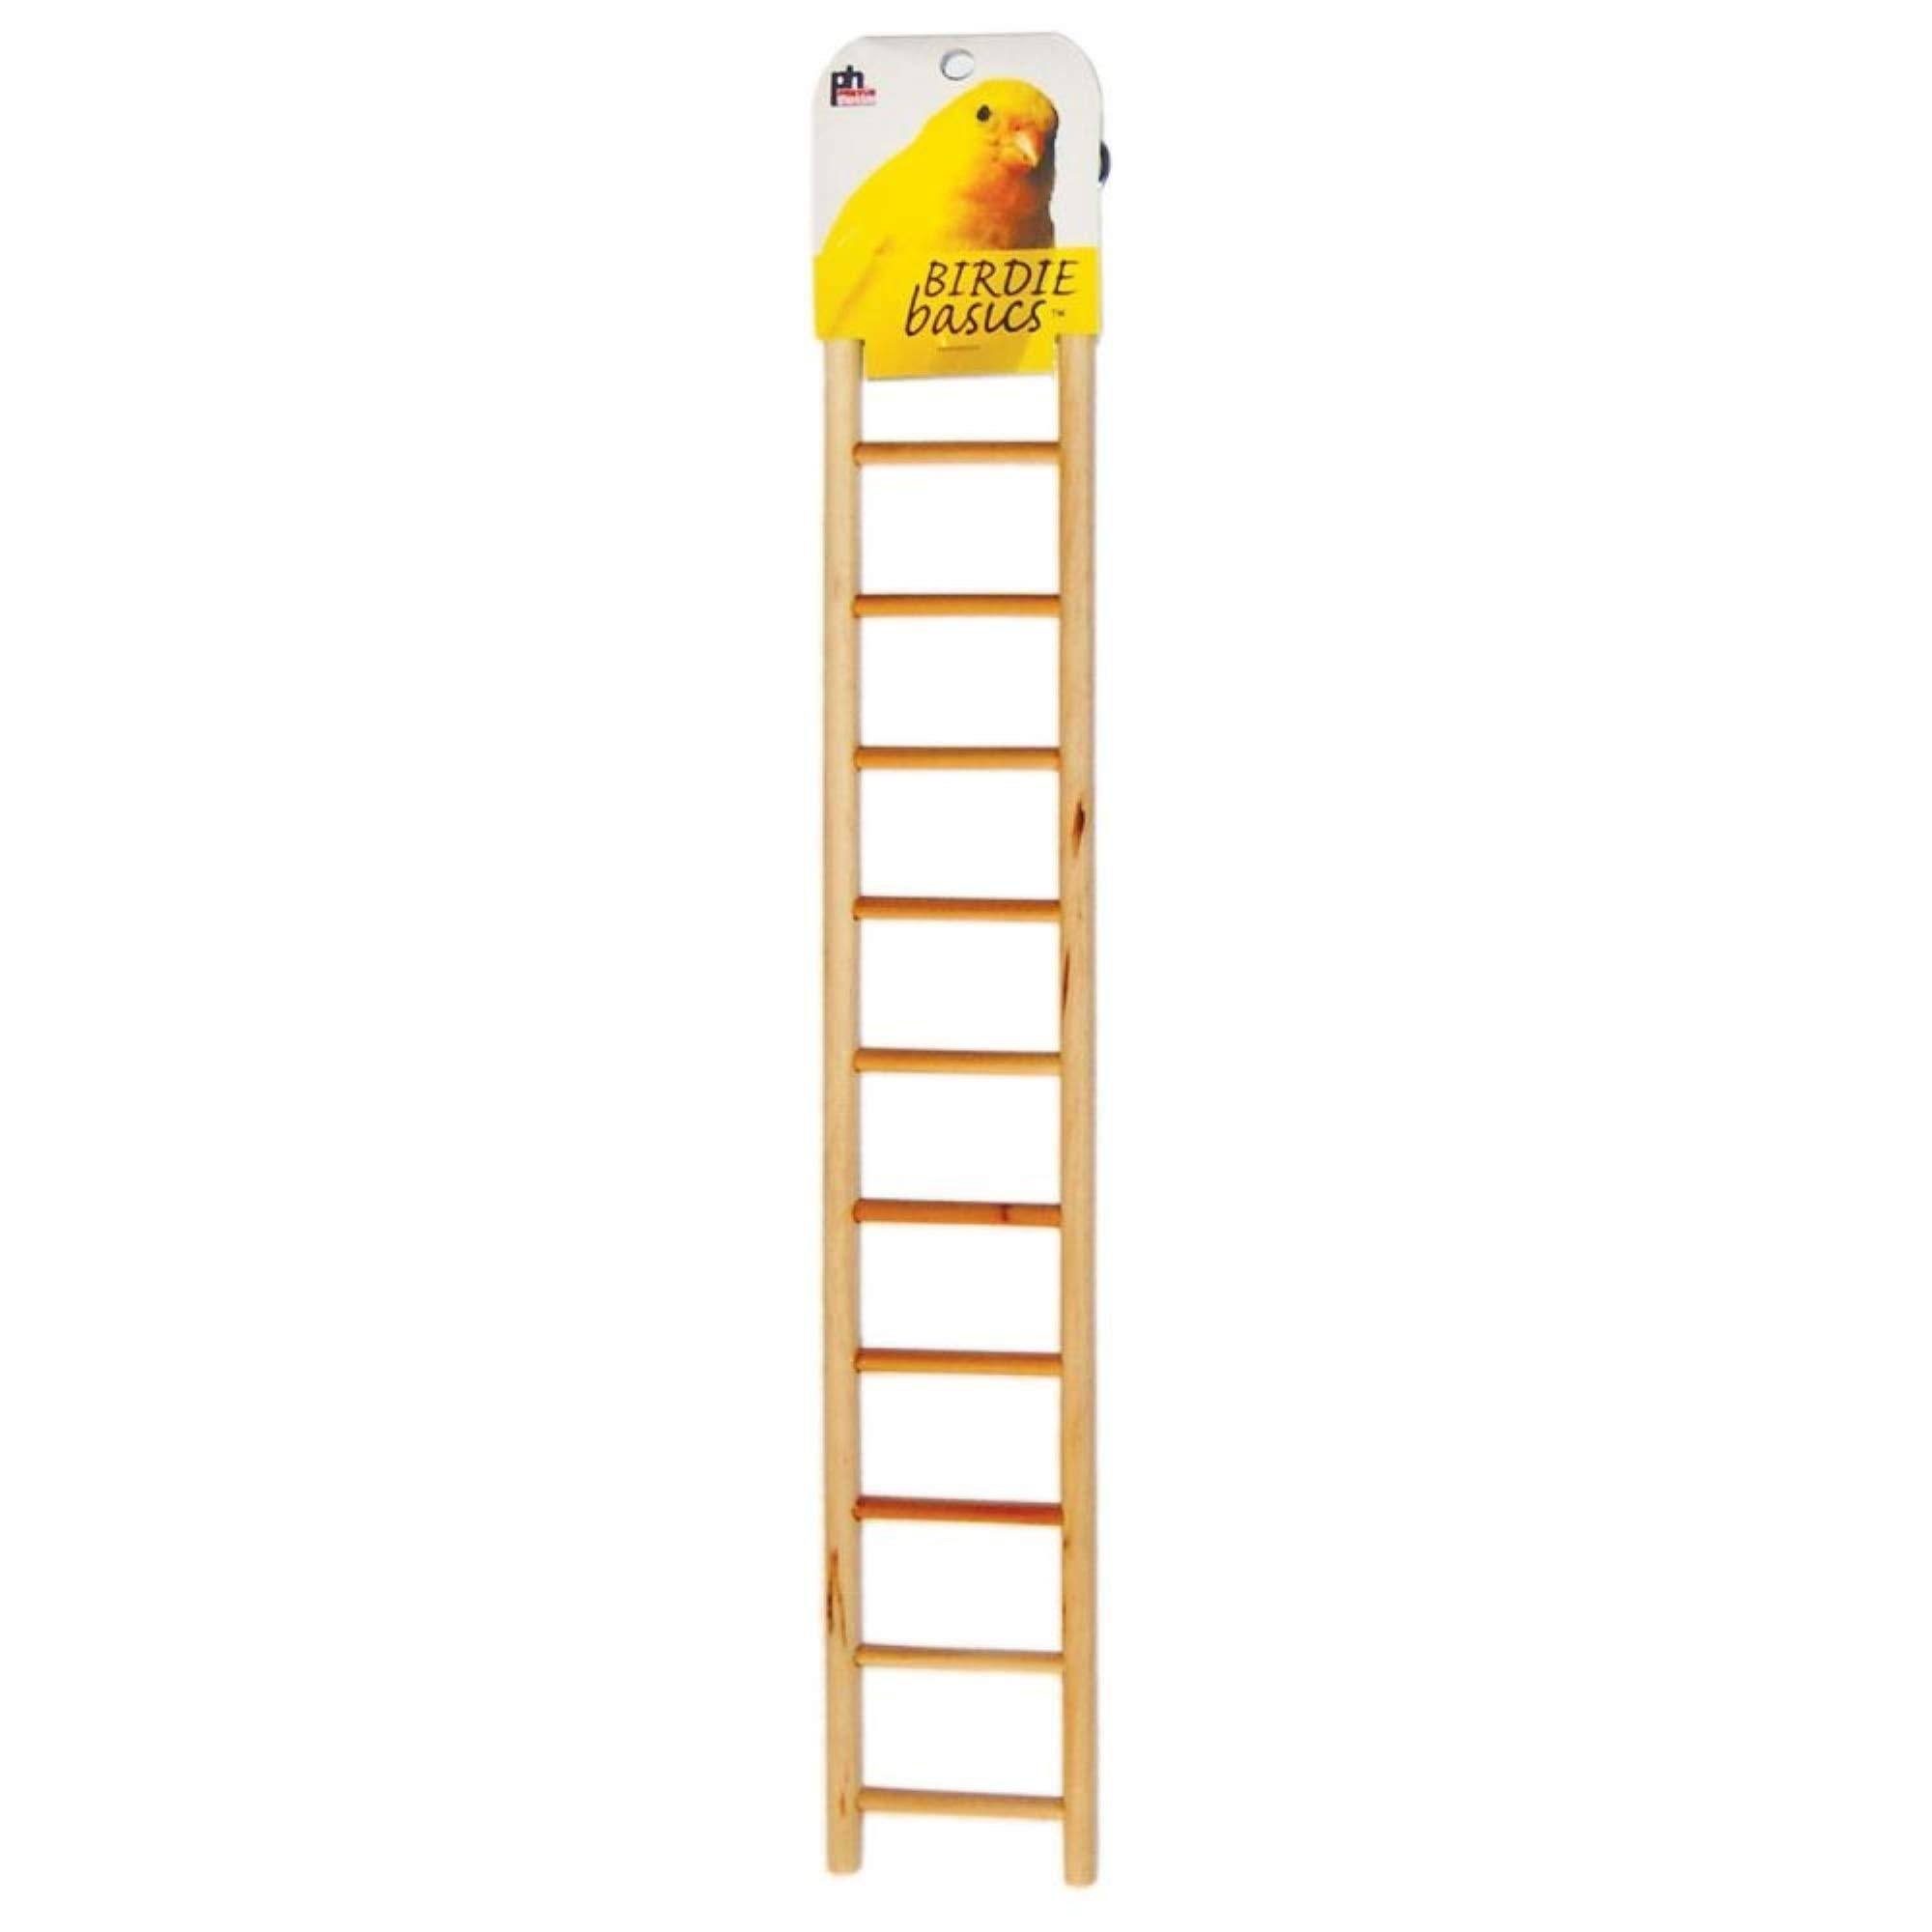 Prevue Pet Products Birdie Basics Ladder - Wood